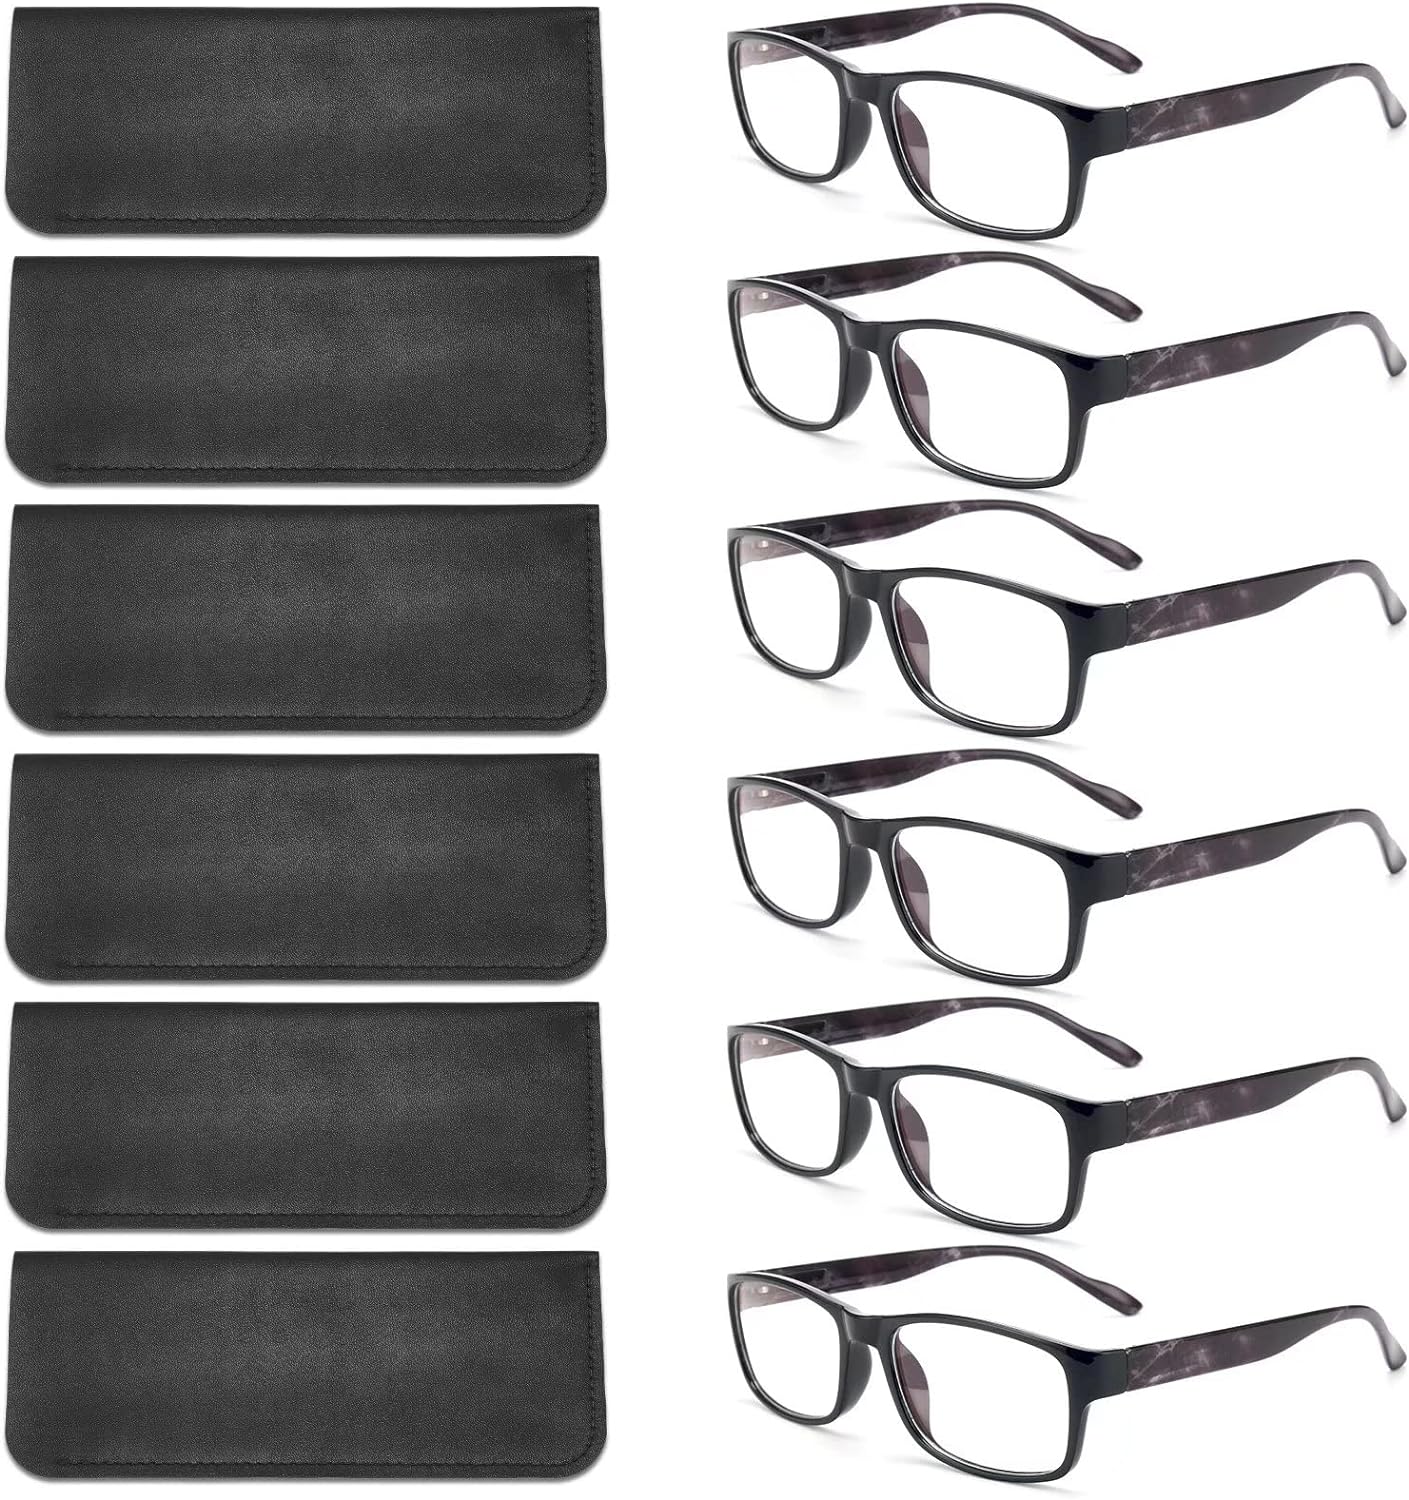 BLS BLUES Reading Glasses for WomenMen Blue Light Blocking, Fashion Readers Anti Eye StrainMigraine Eyeglasses 6 PacksCase